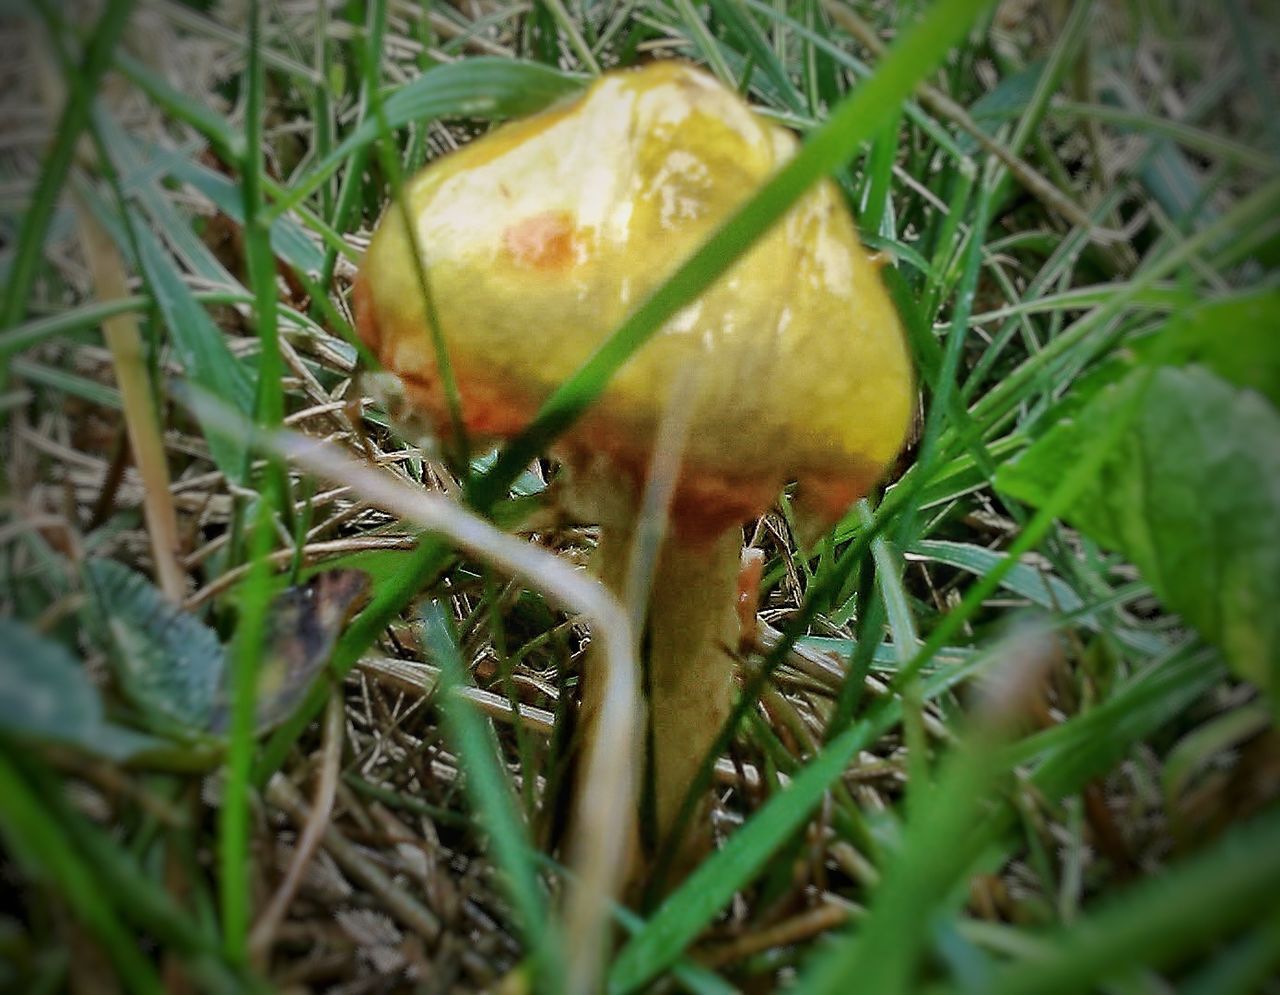 Fungus photography